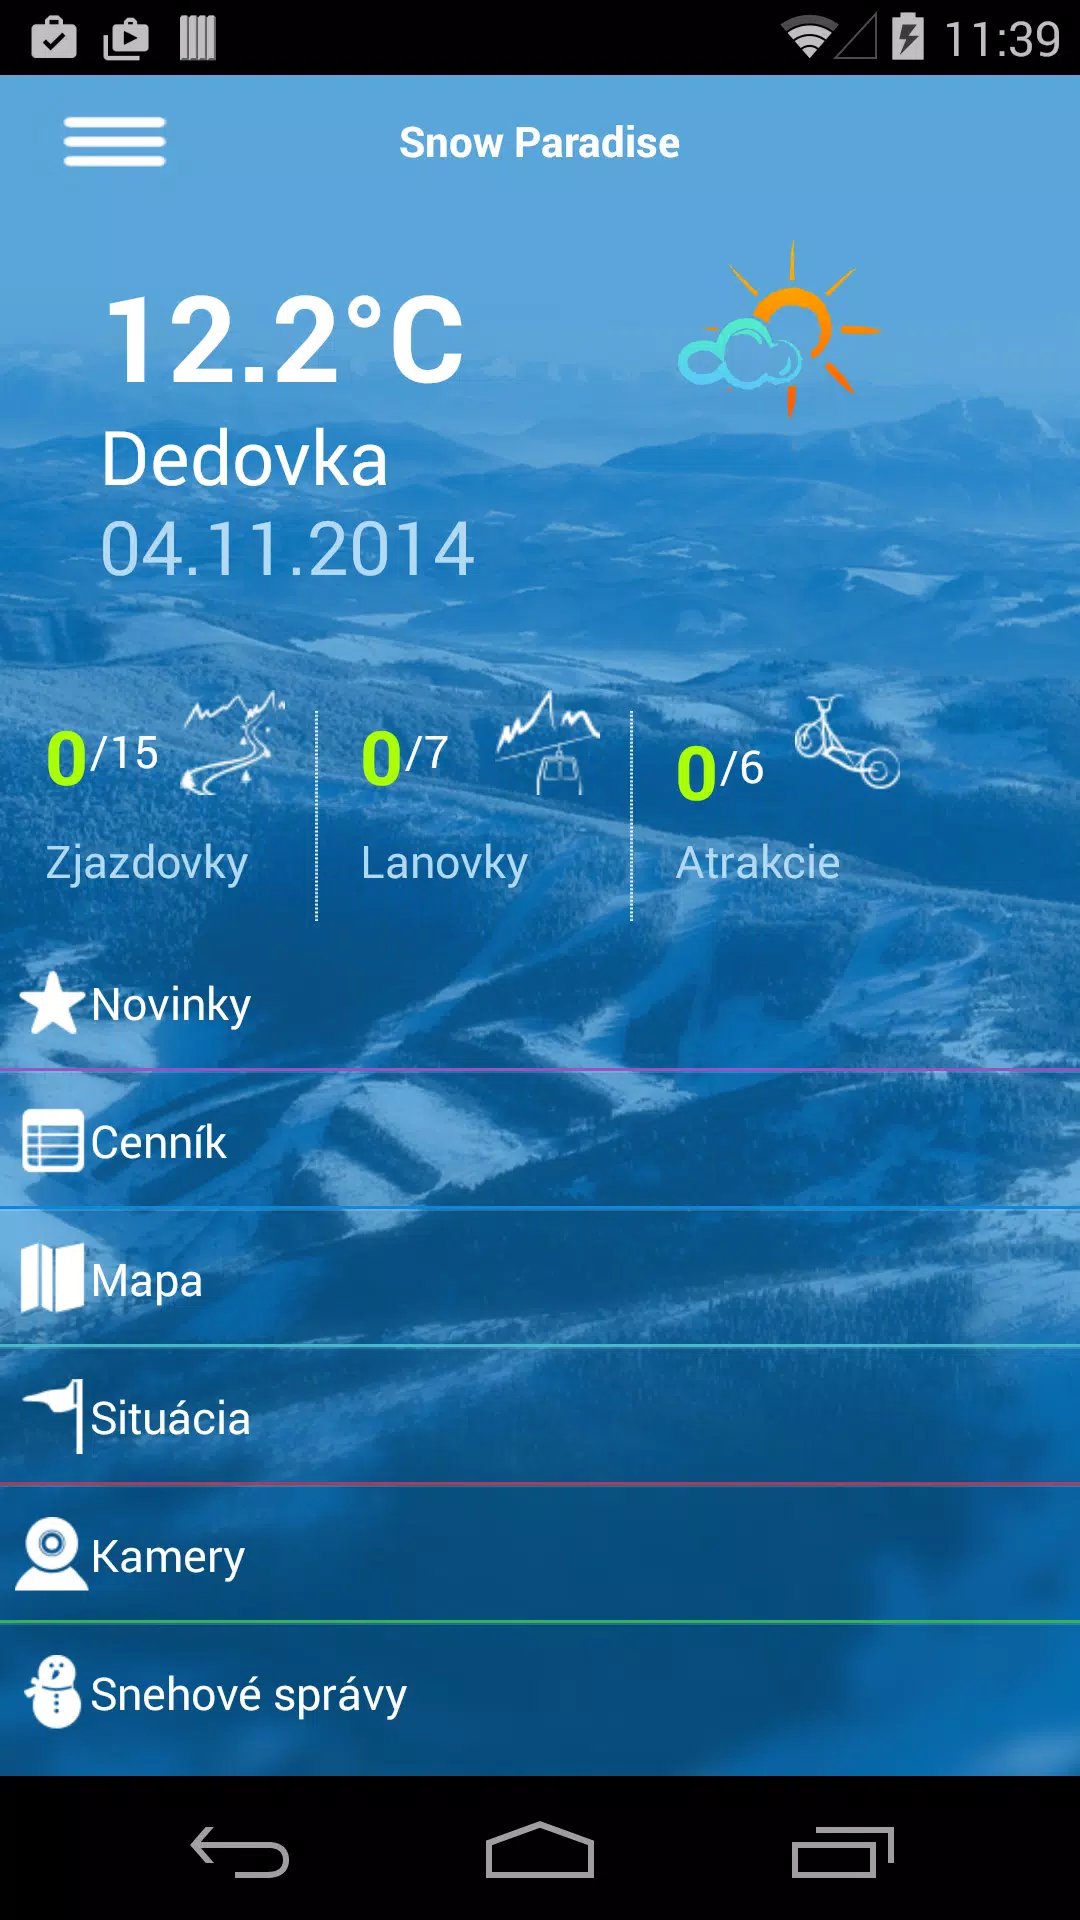 SnowParadise Velka Raca APK pour Android Télécharger